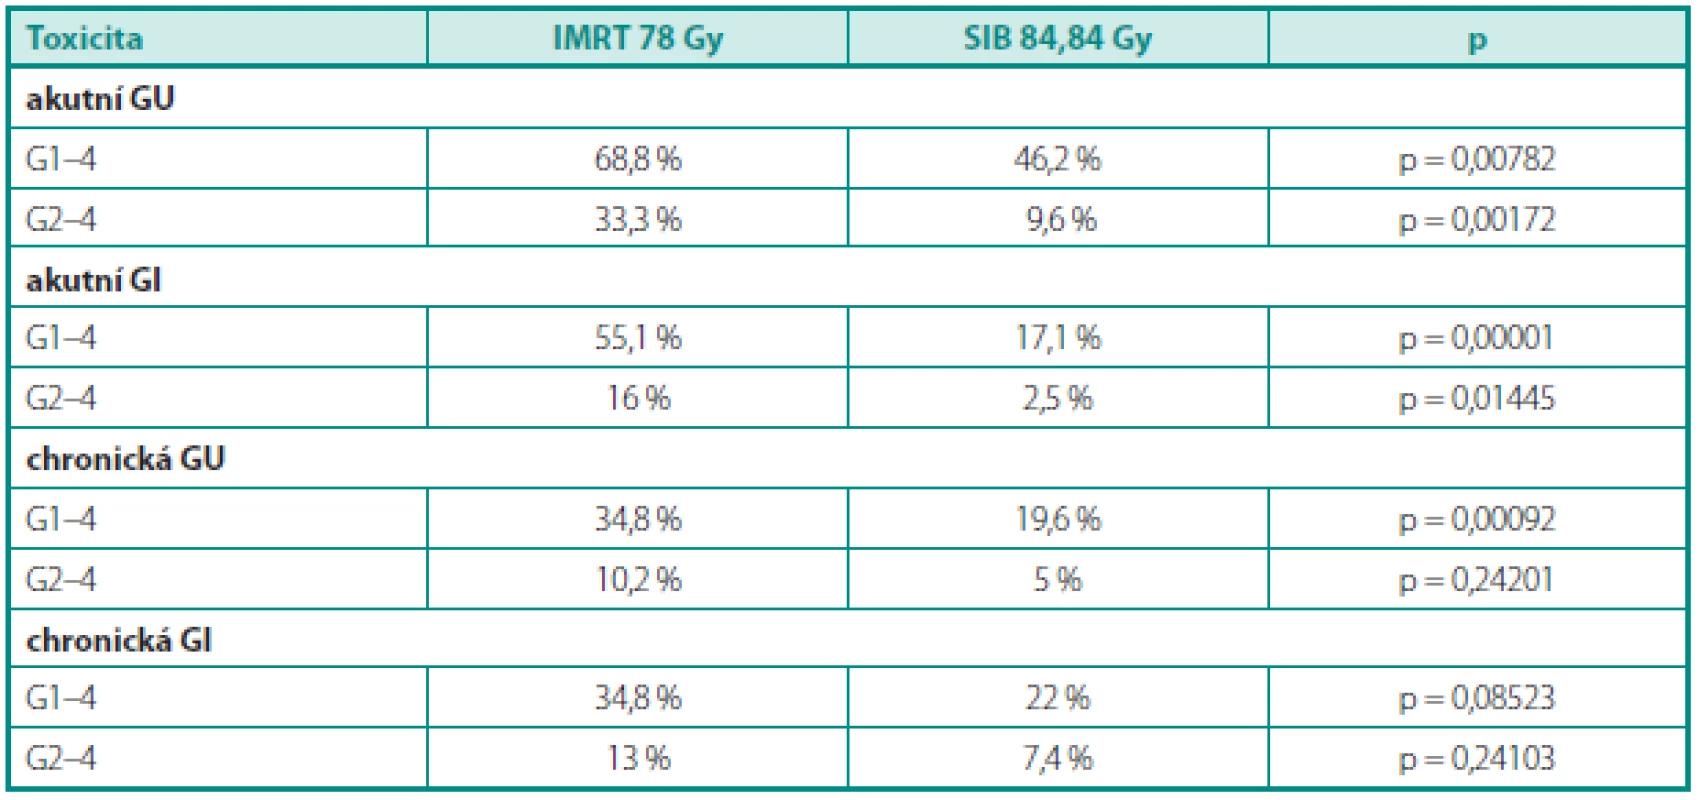 Srovnání akutní a chronické toxicity mezi IMRT 78 a SIB 84,84
Table 2. Comparison of acute and late toxicity between IMRT 78 and SIB 84.84